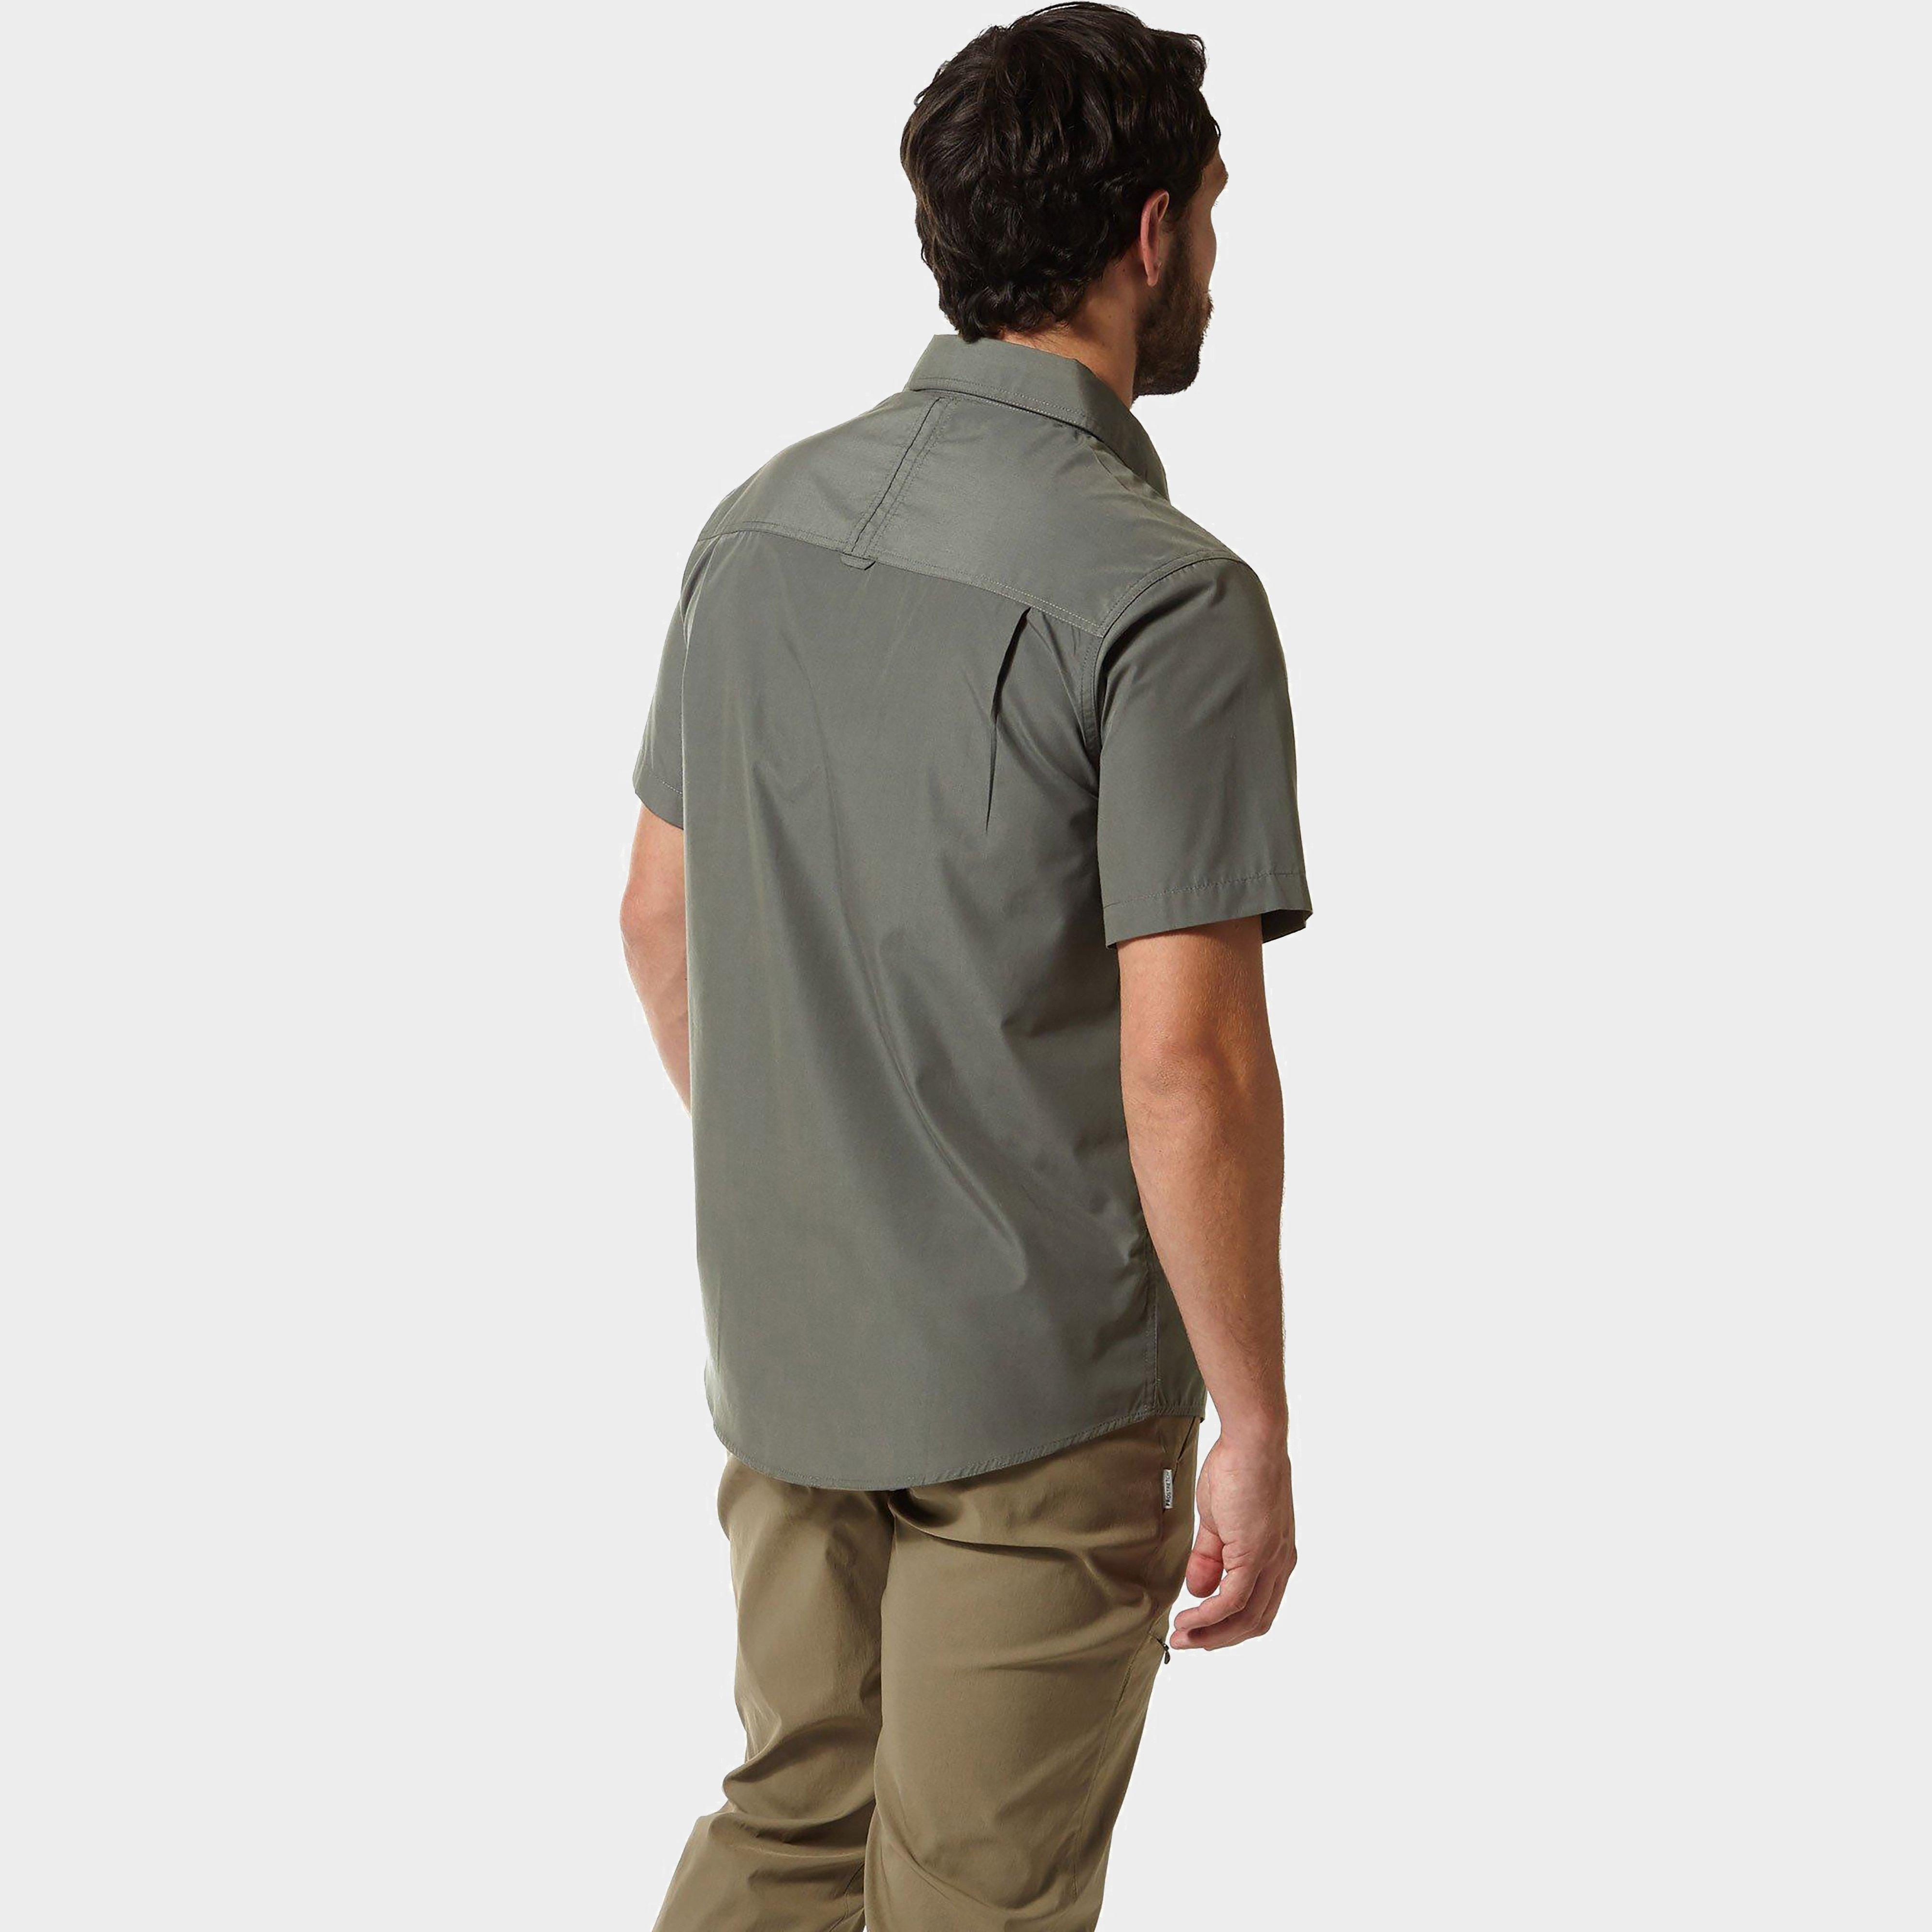 Craghoppers Men's Kiwi Short Sleeved Shirt Review